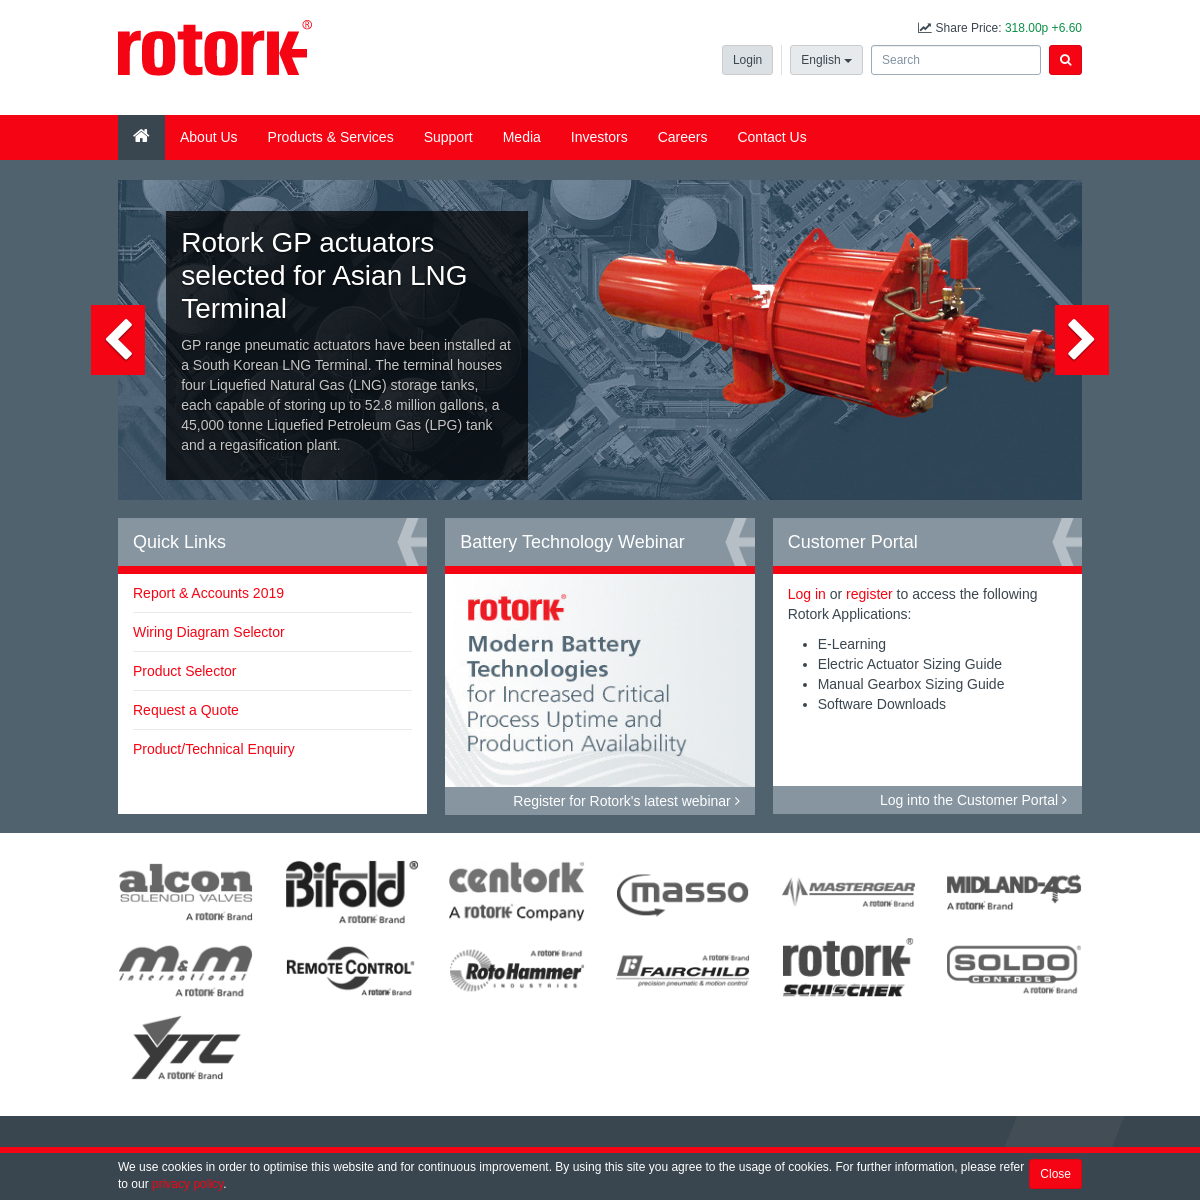 A complete backup of rotork.com